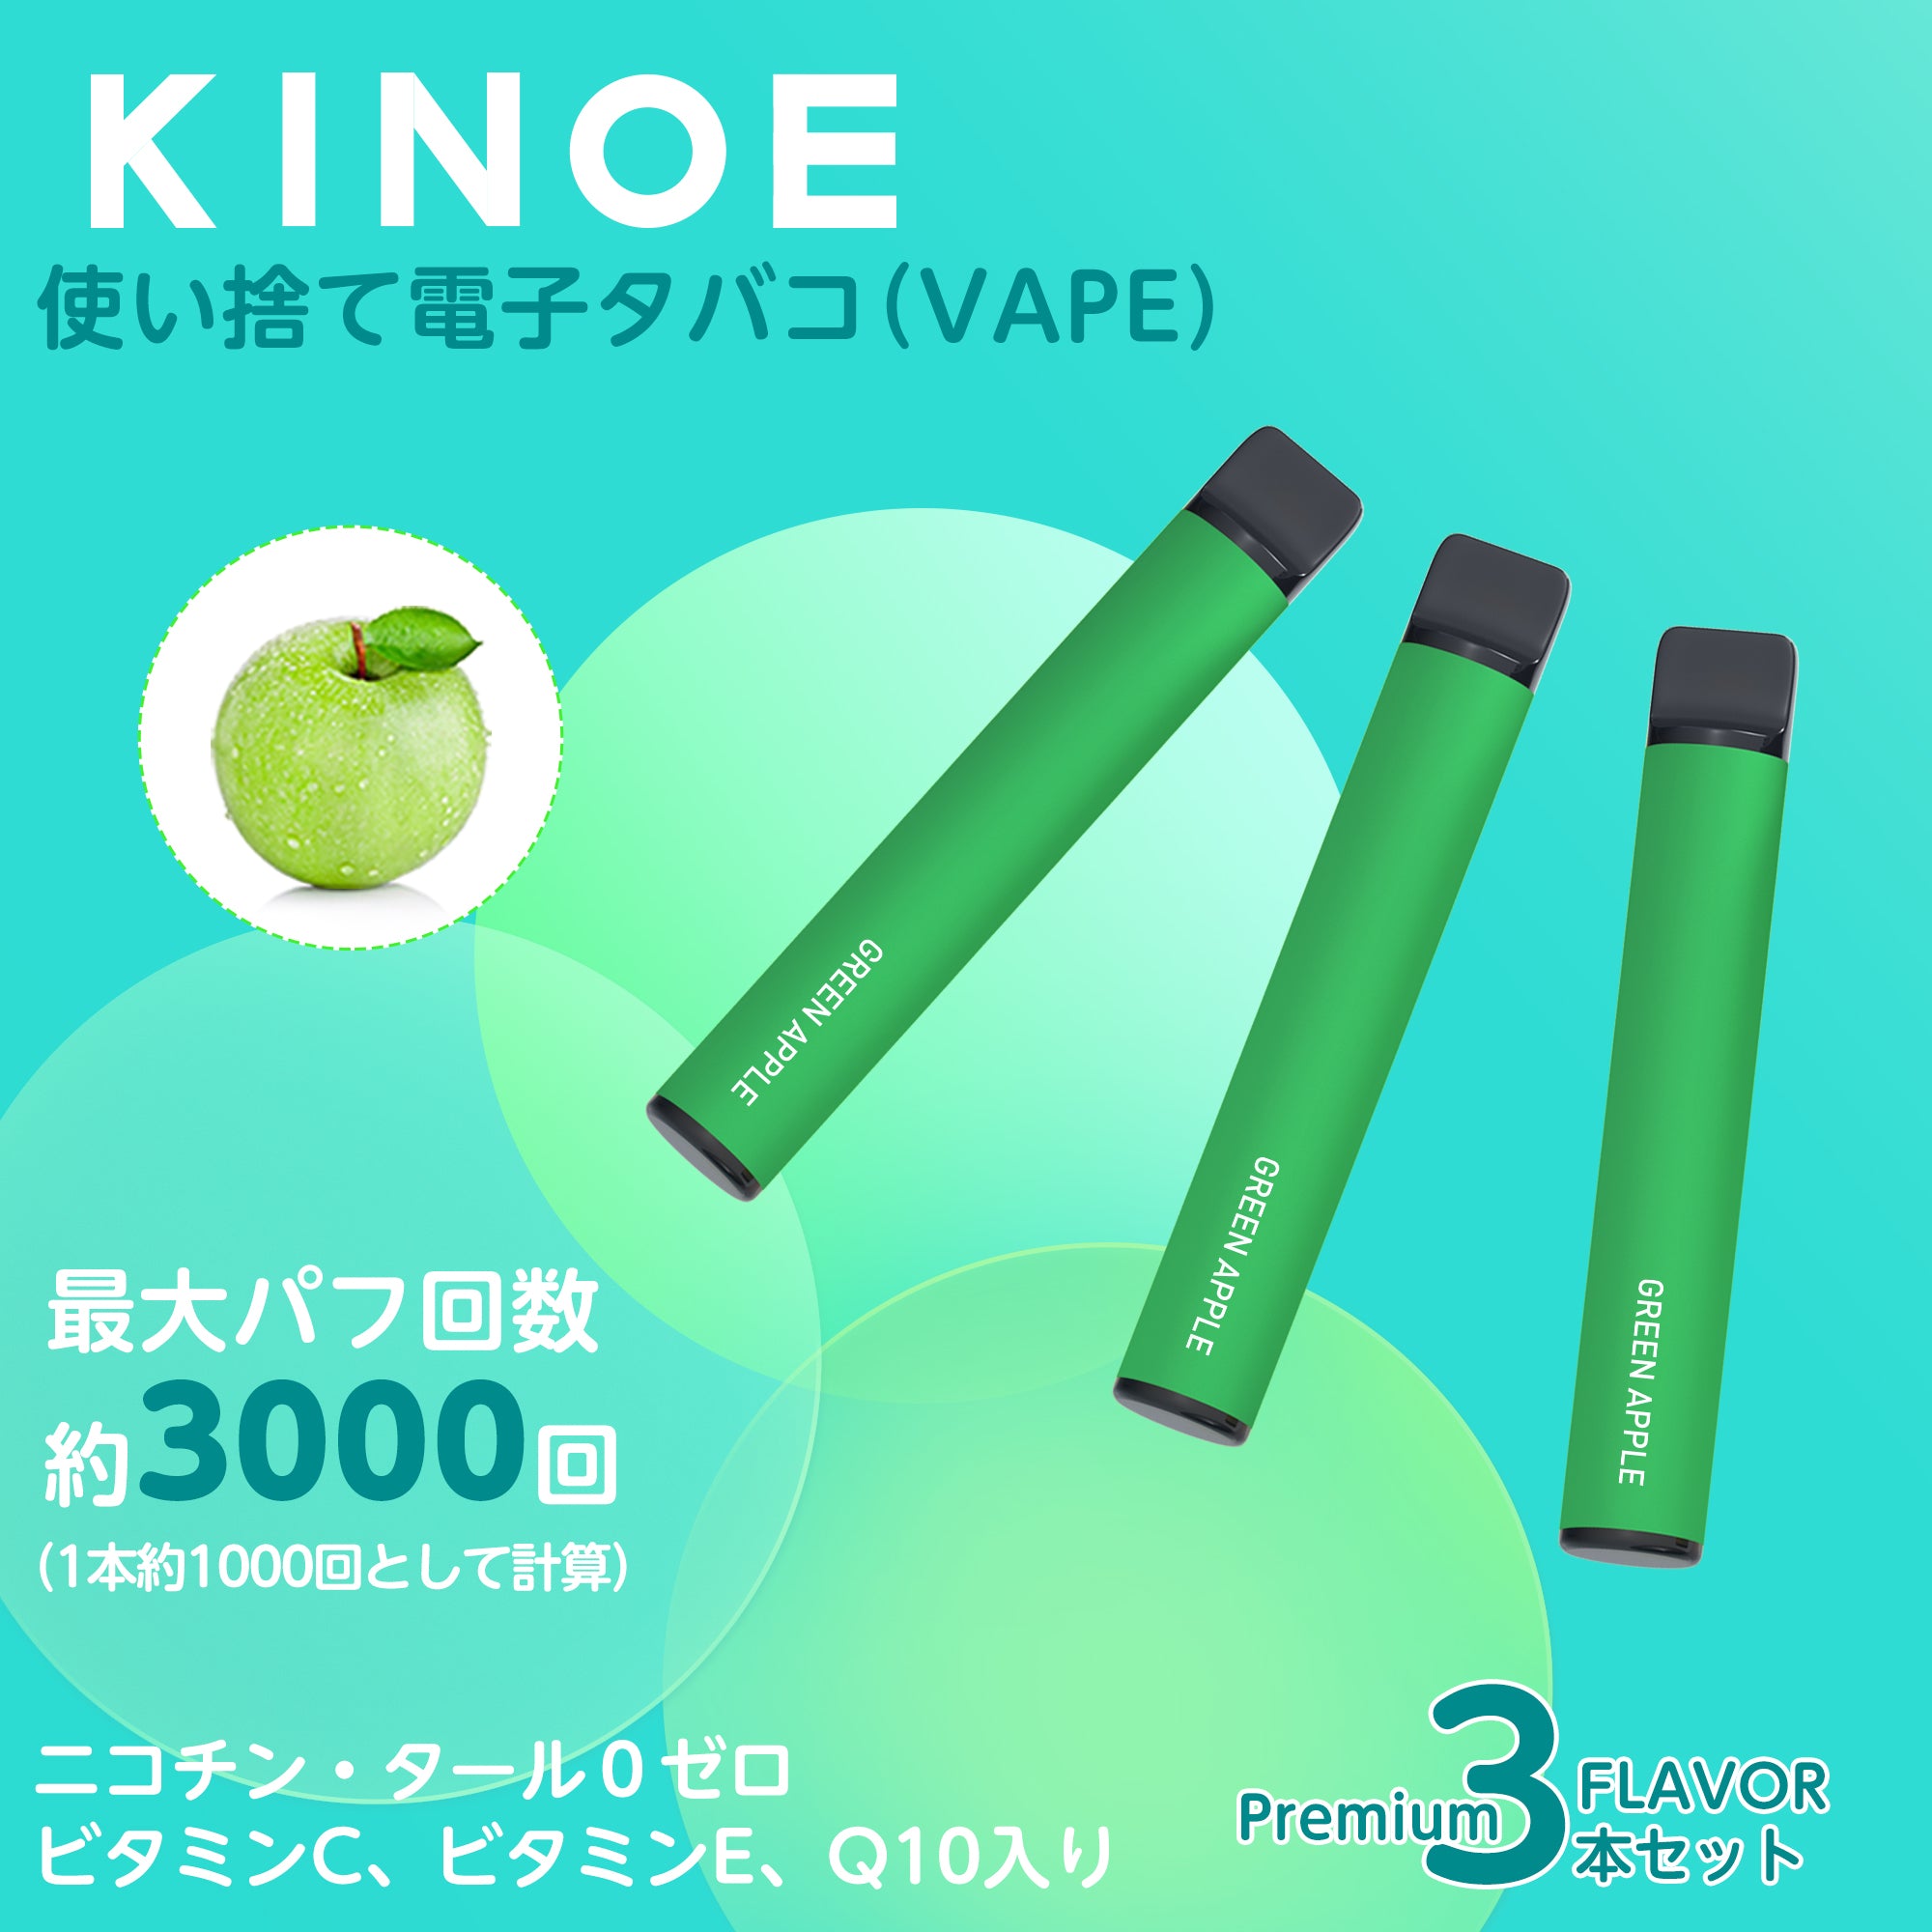 KINOE Disposable Electronic Cigarette Set of 3 (Green Apple)